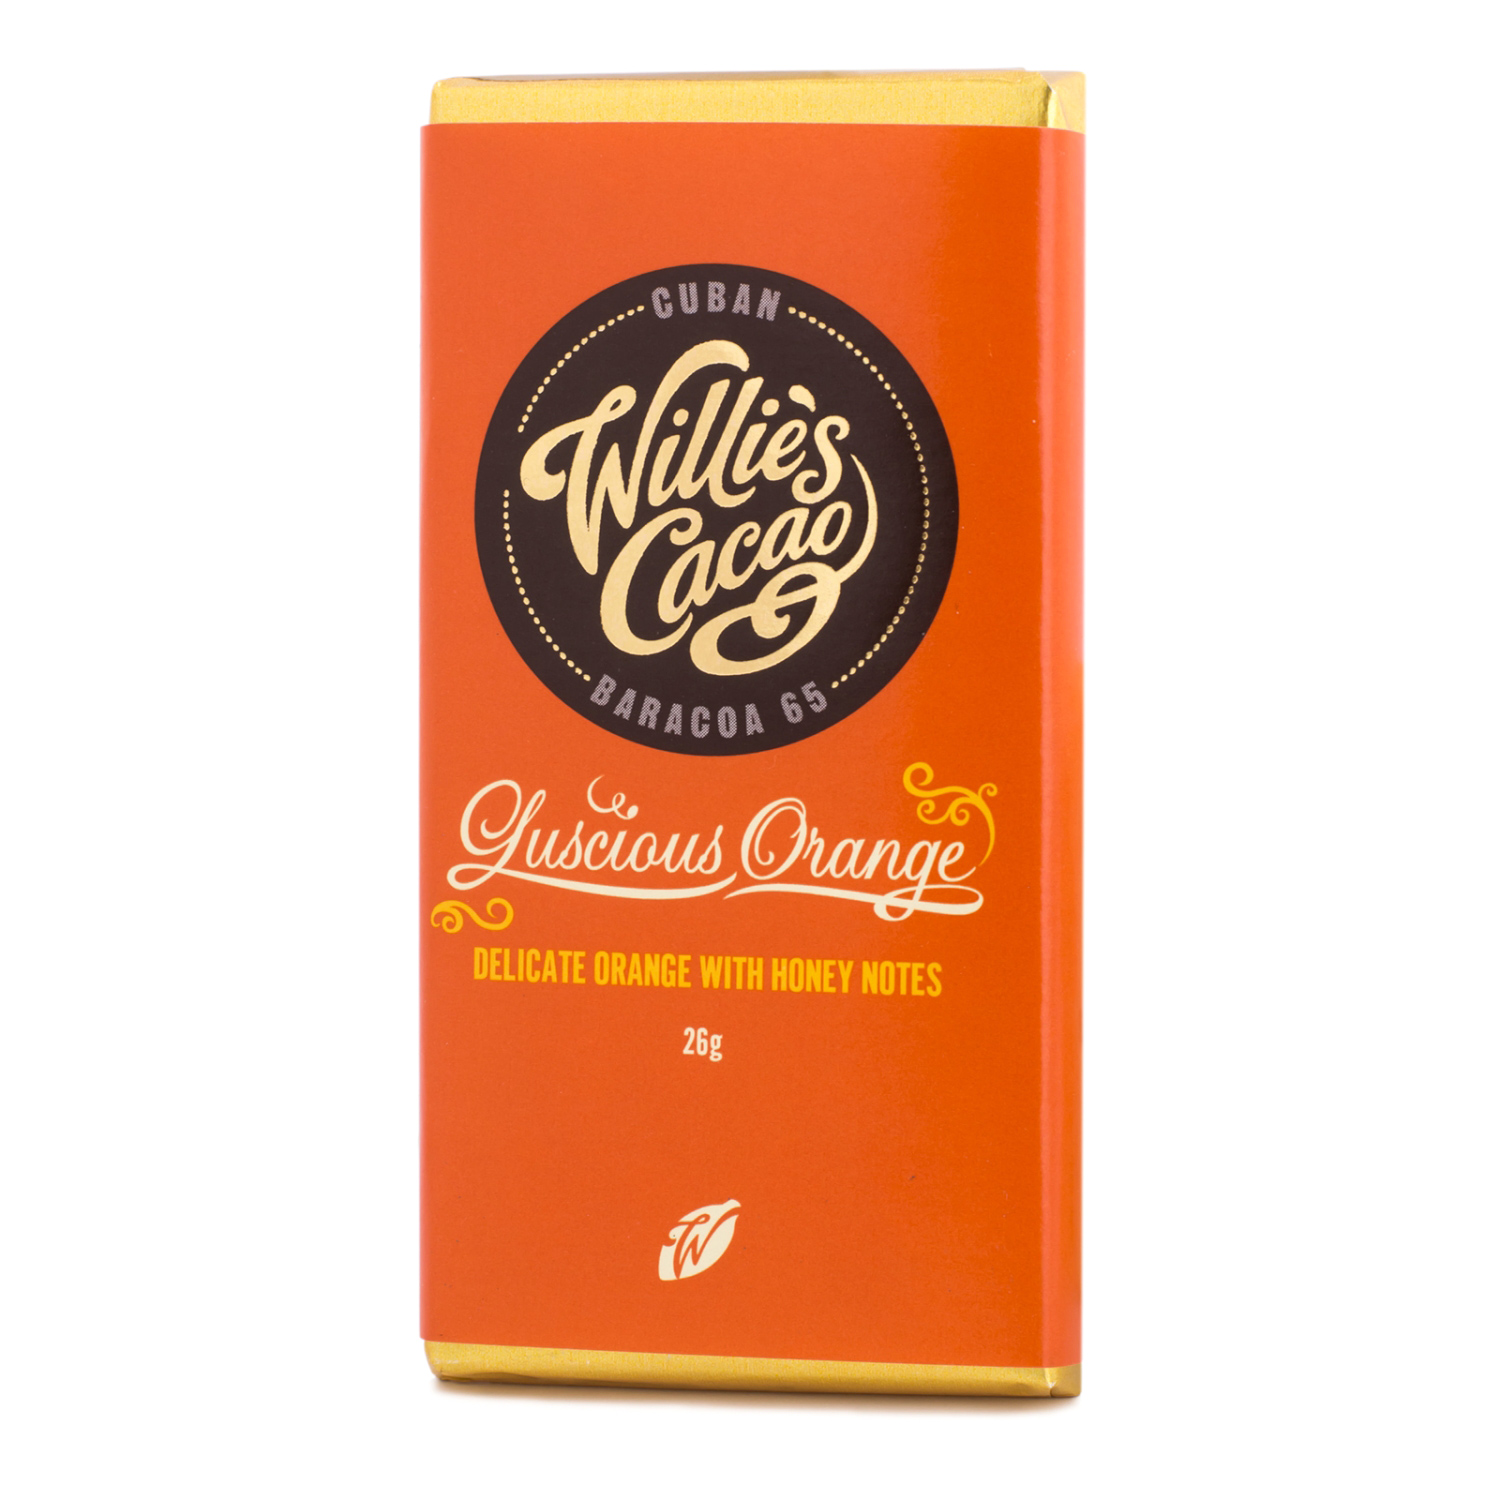 Willie's Cacao - Luscious Orange 26g